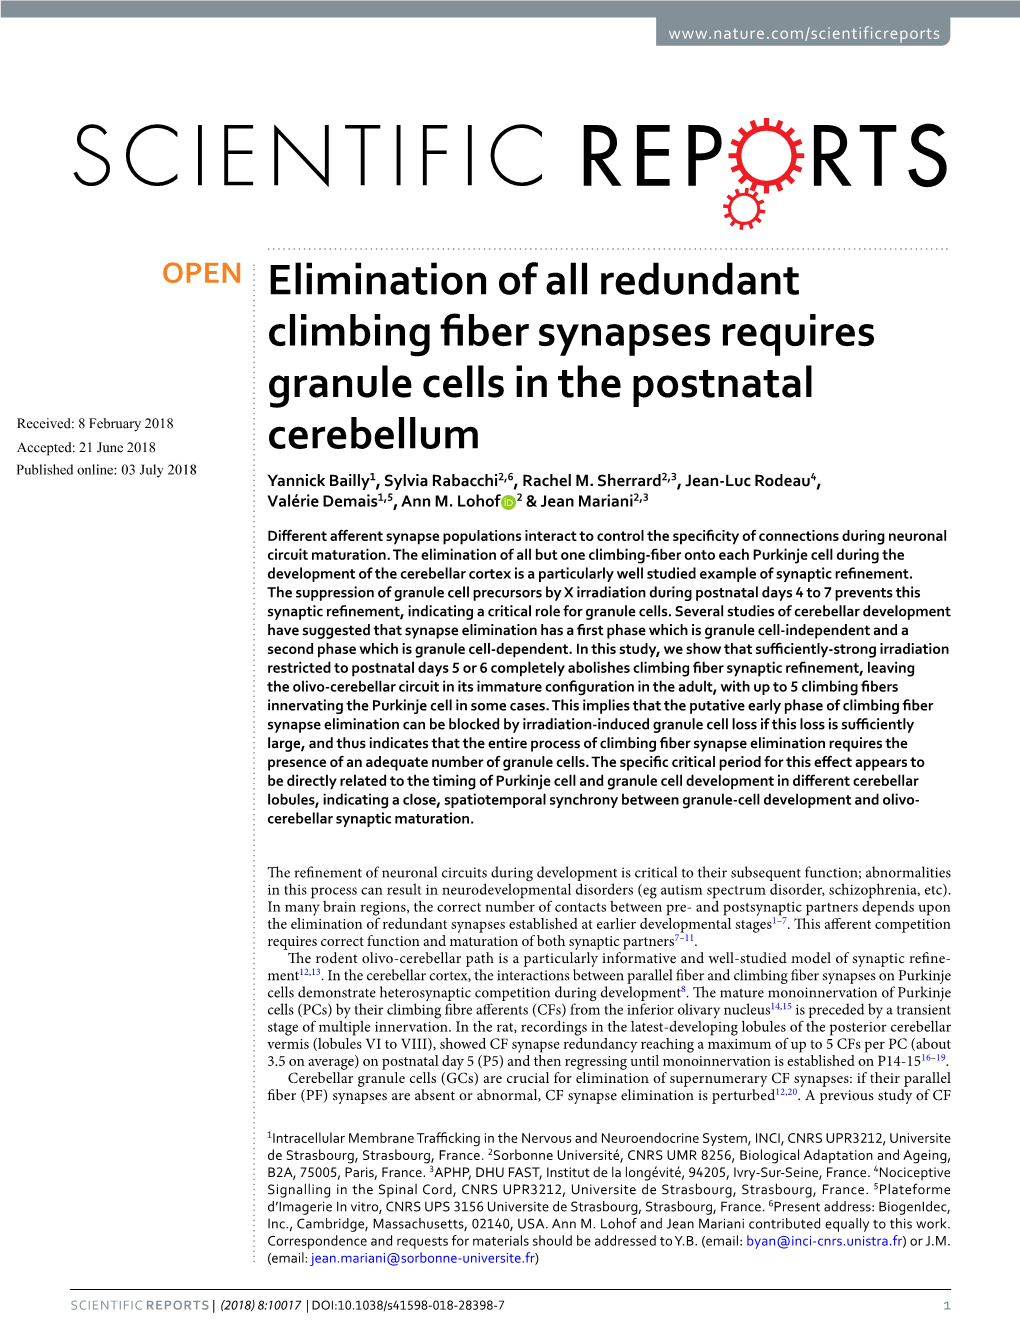 Elimination of All Redundant Climbing Fiber Synapses Requires Granule